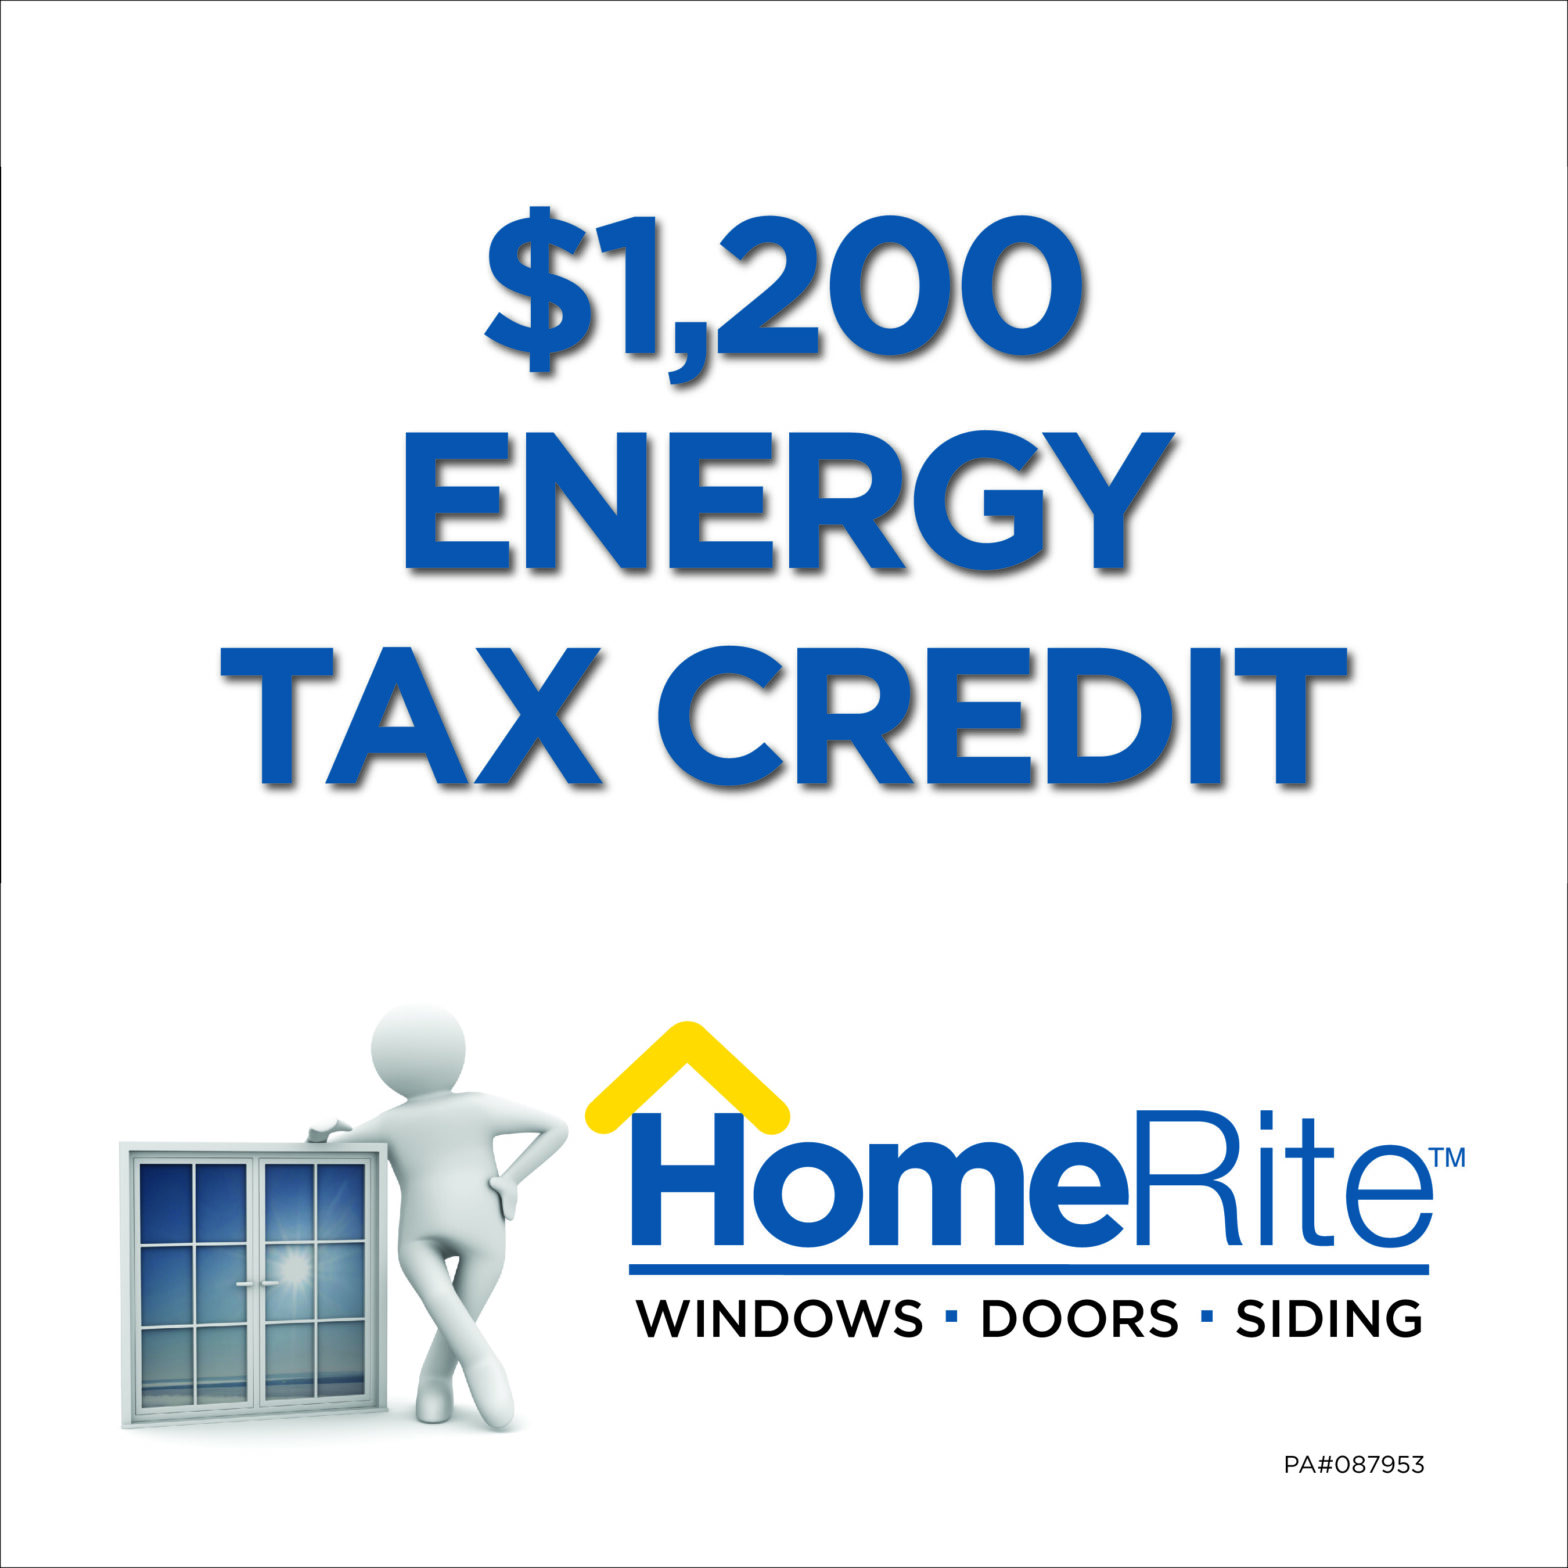 human figure leaning on door $1,200 energy tax credit